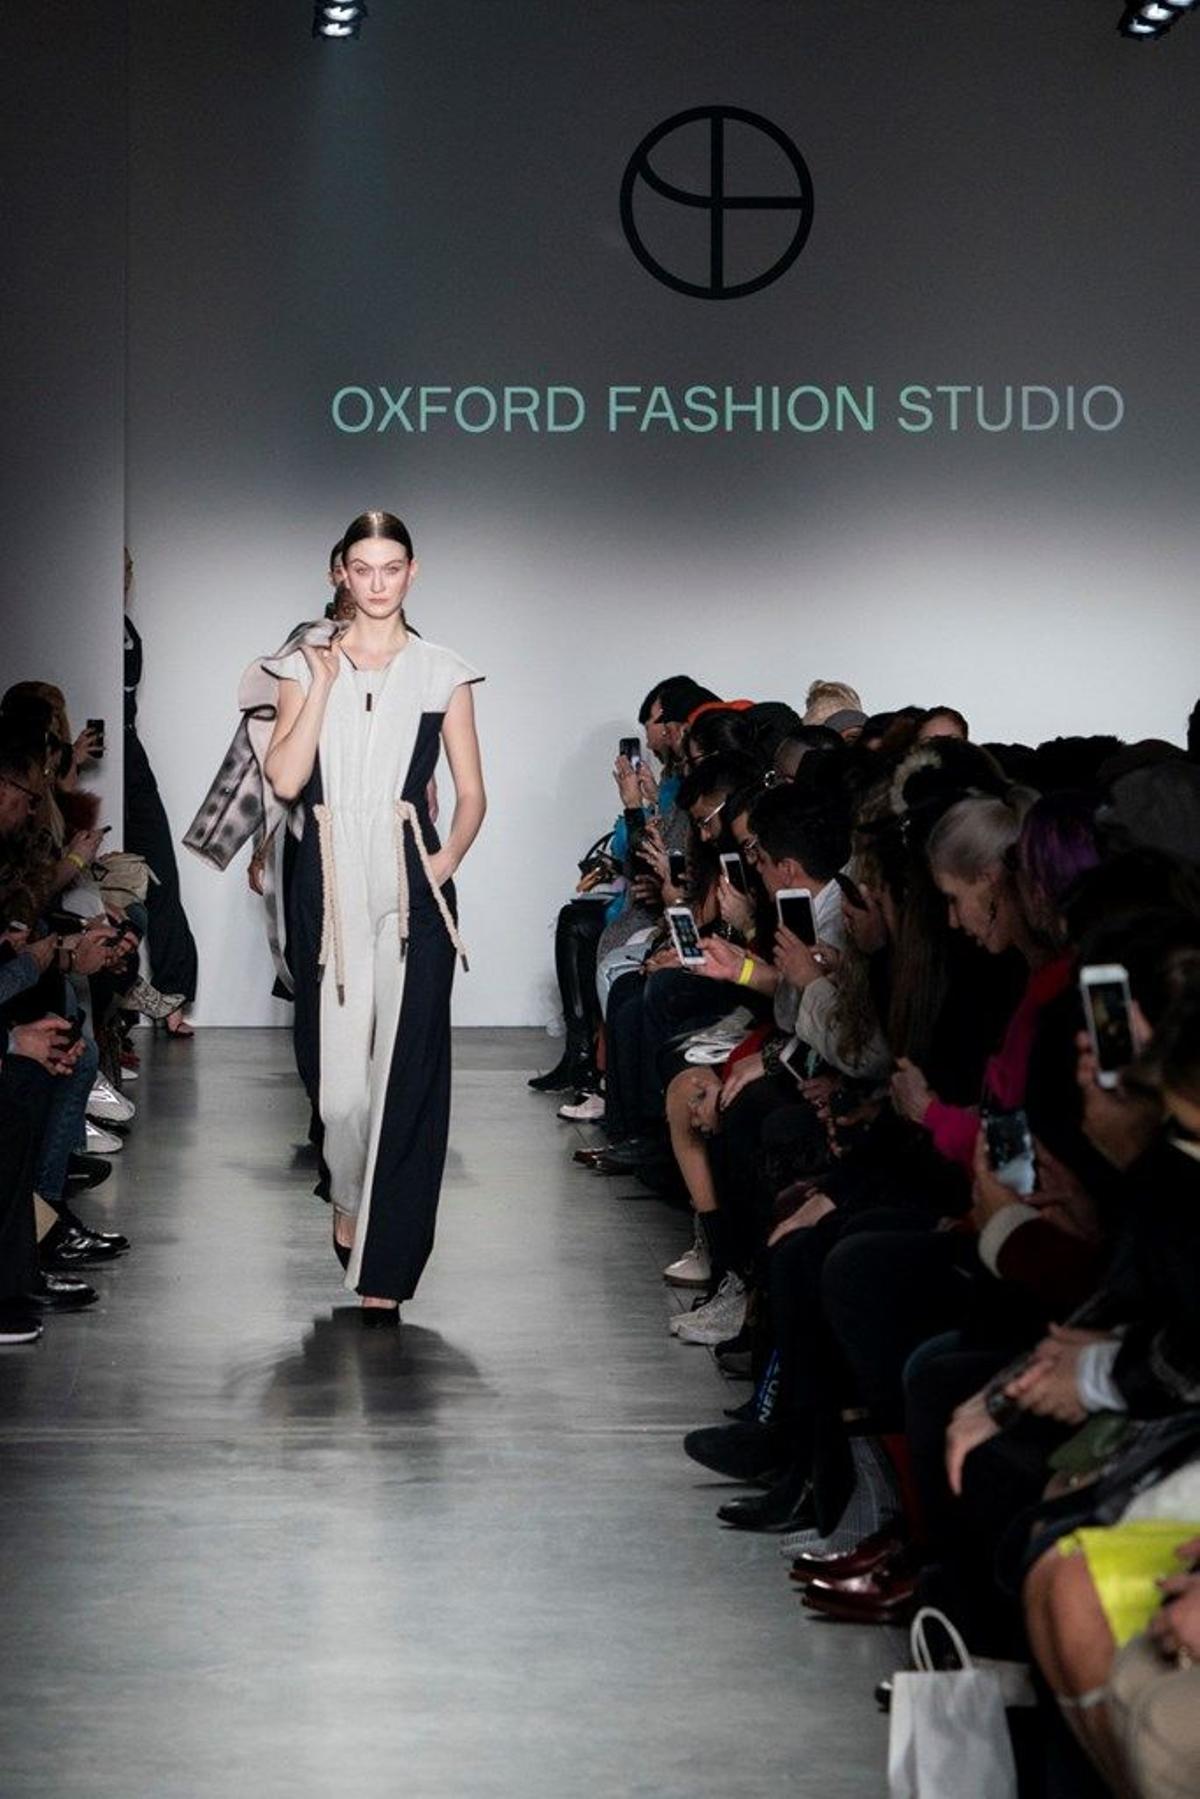 Oxford Fashion Studio